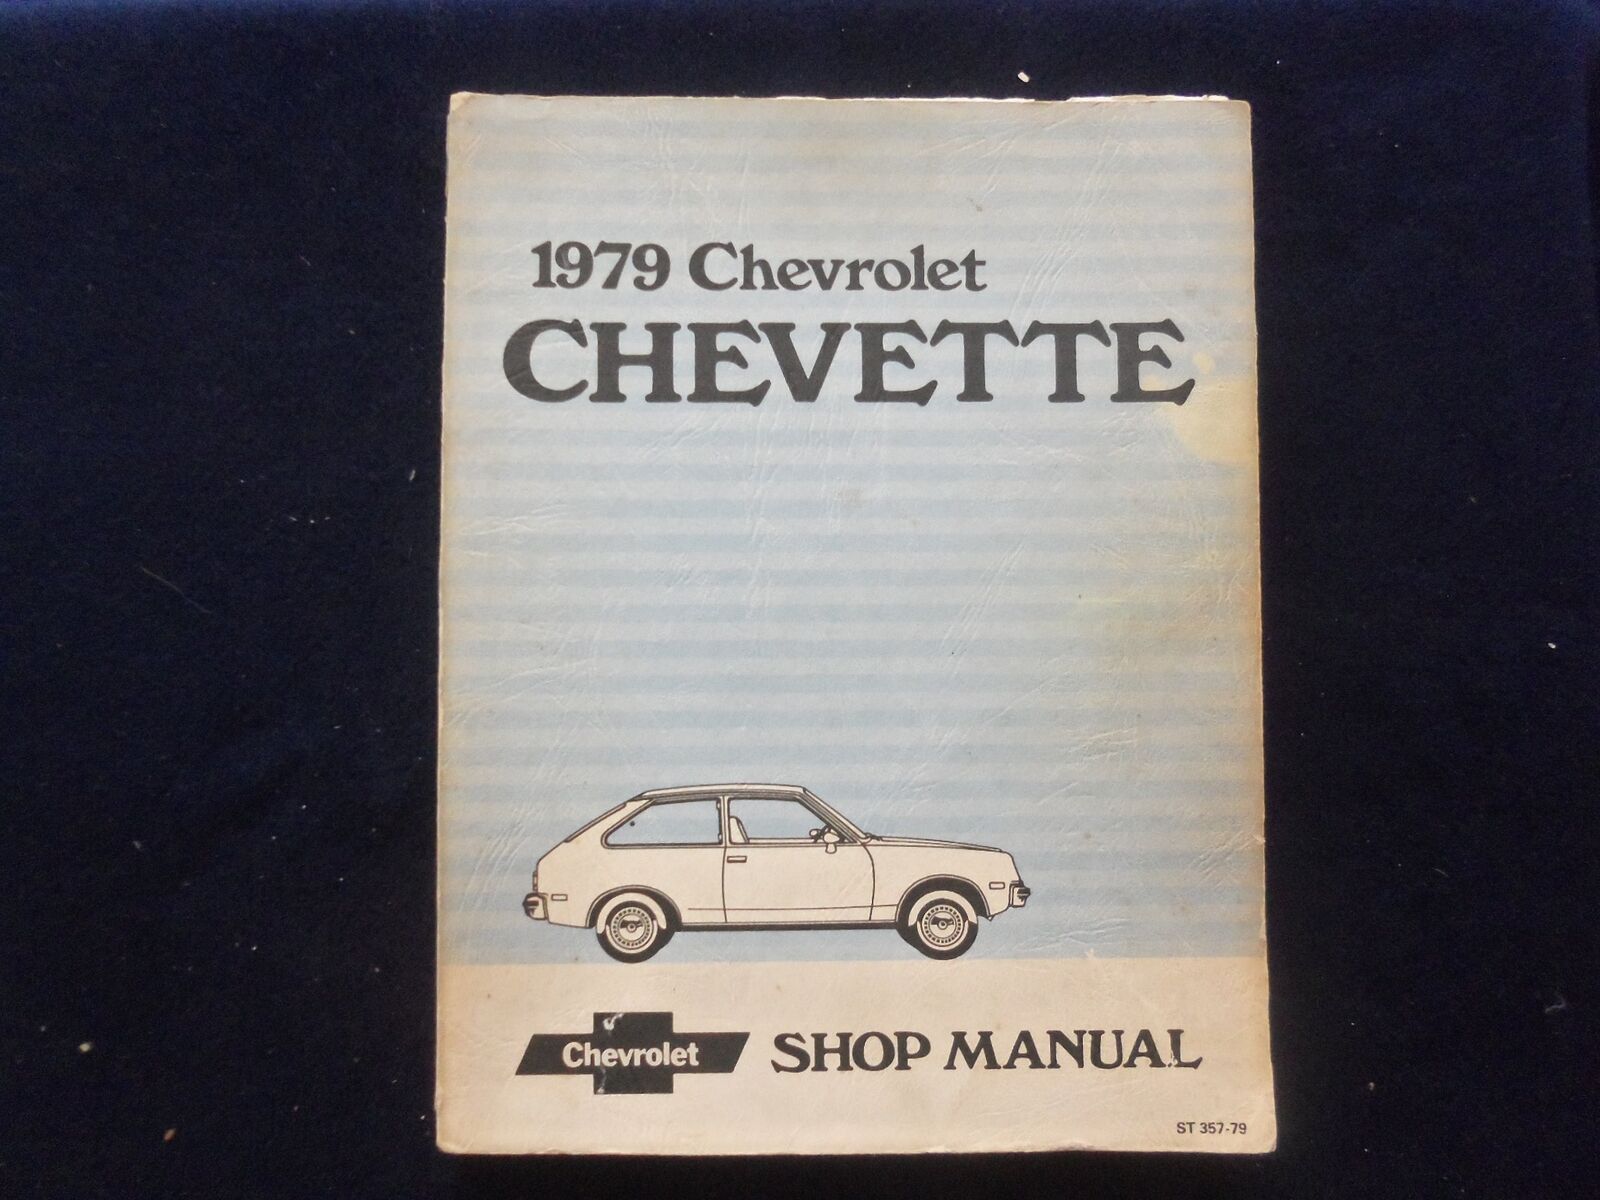 1979 CHEVROLET CHEVETTE SHOP MANUAL - SOFTCOVER MANUAL - KD 8881